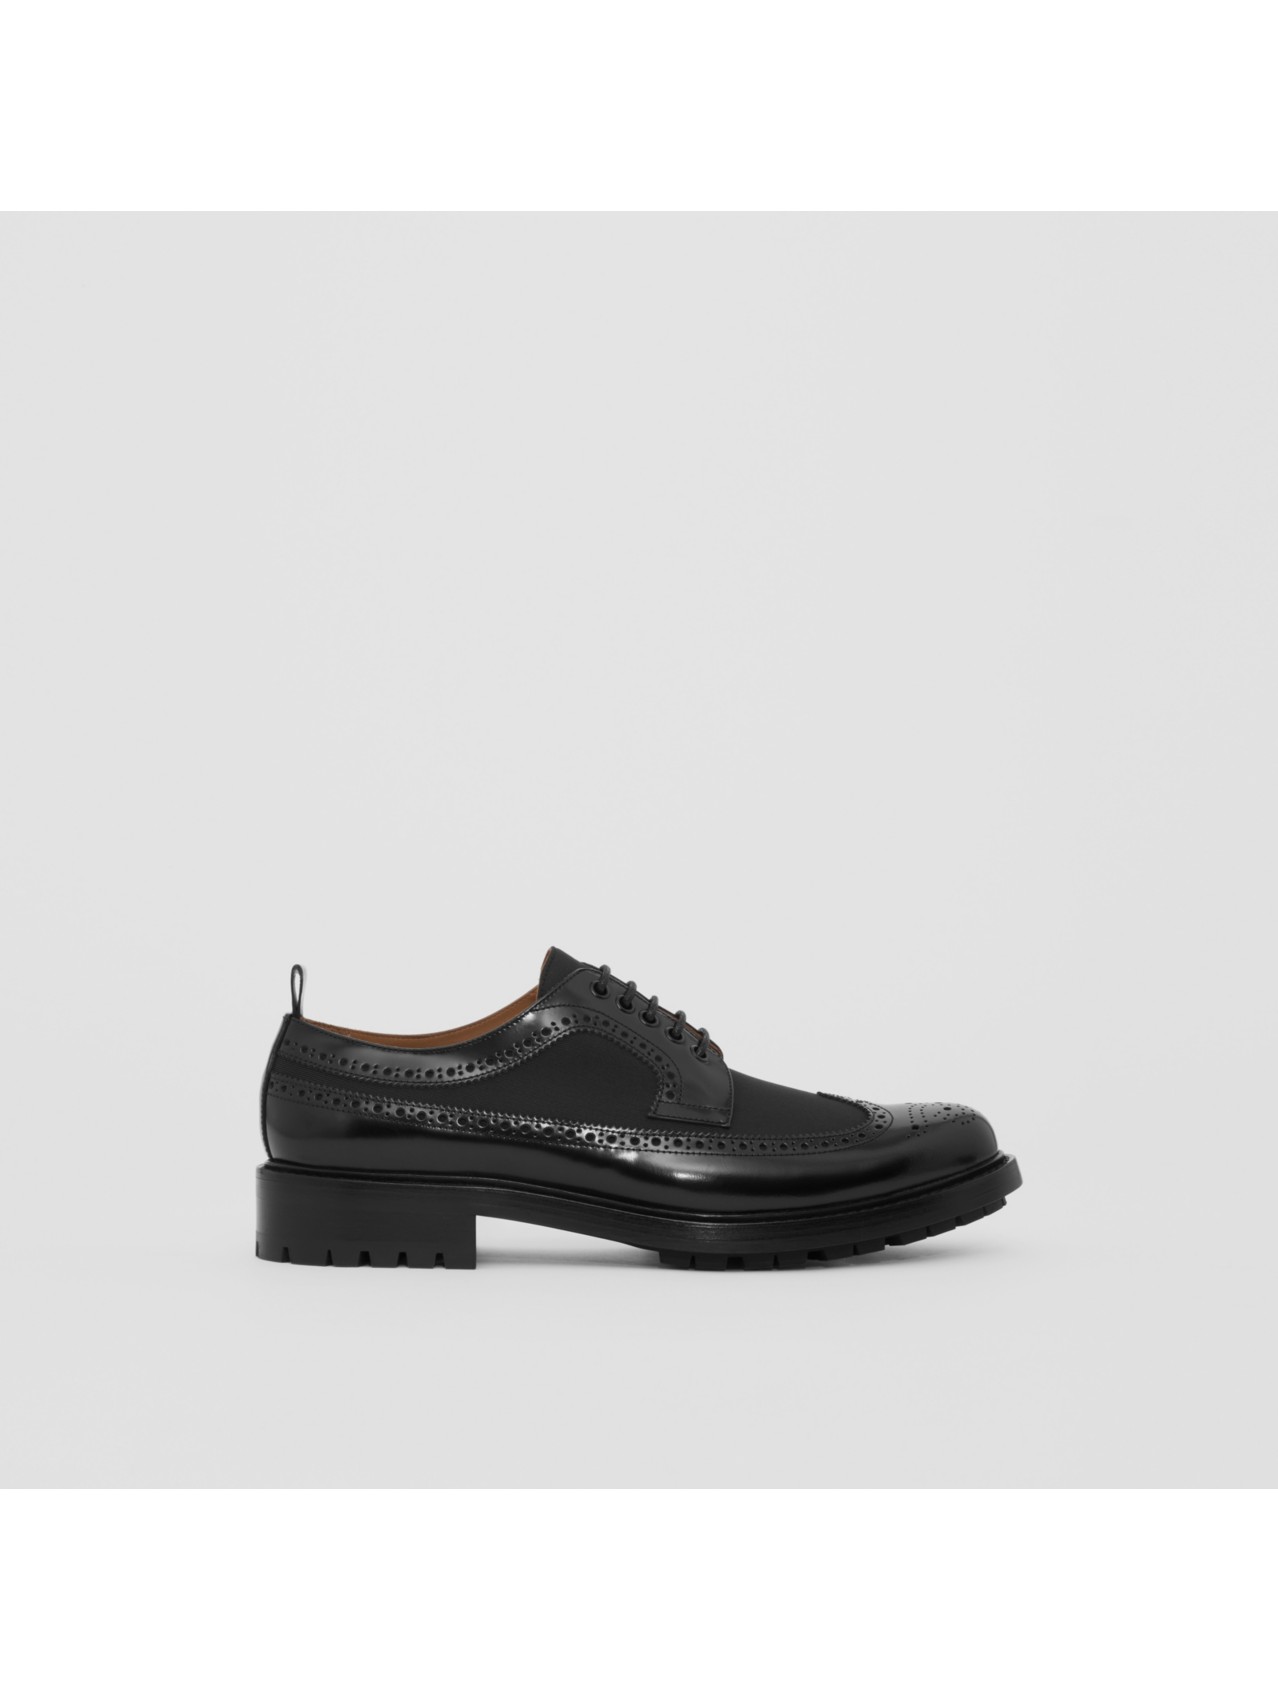 Men's Shoes | Men's Casual & Formal Footwear | Burberry® Official